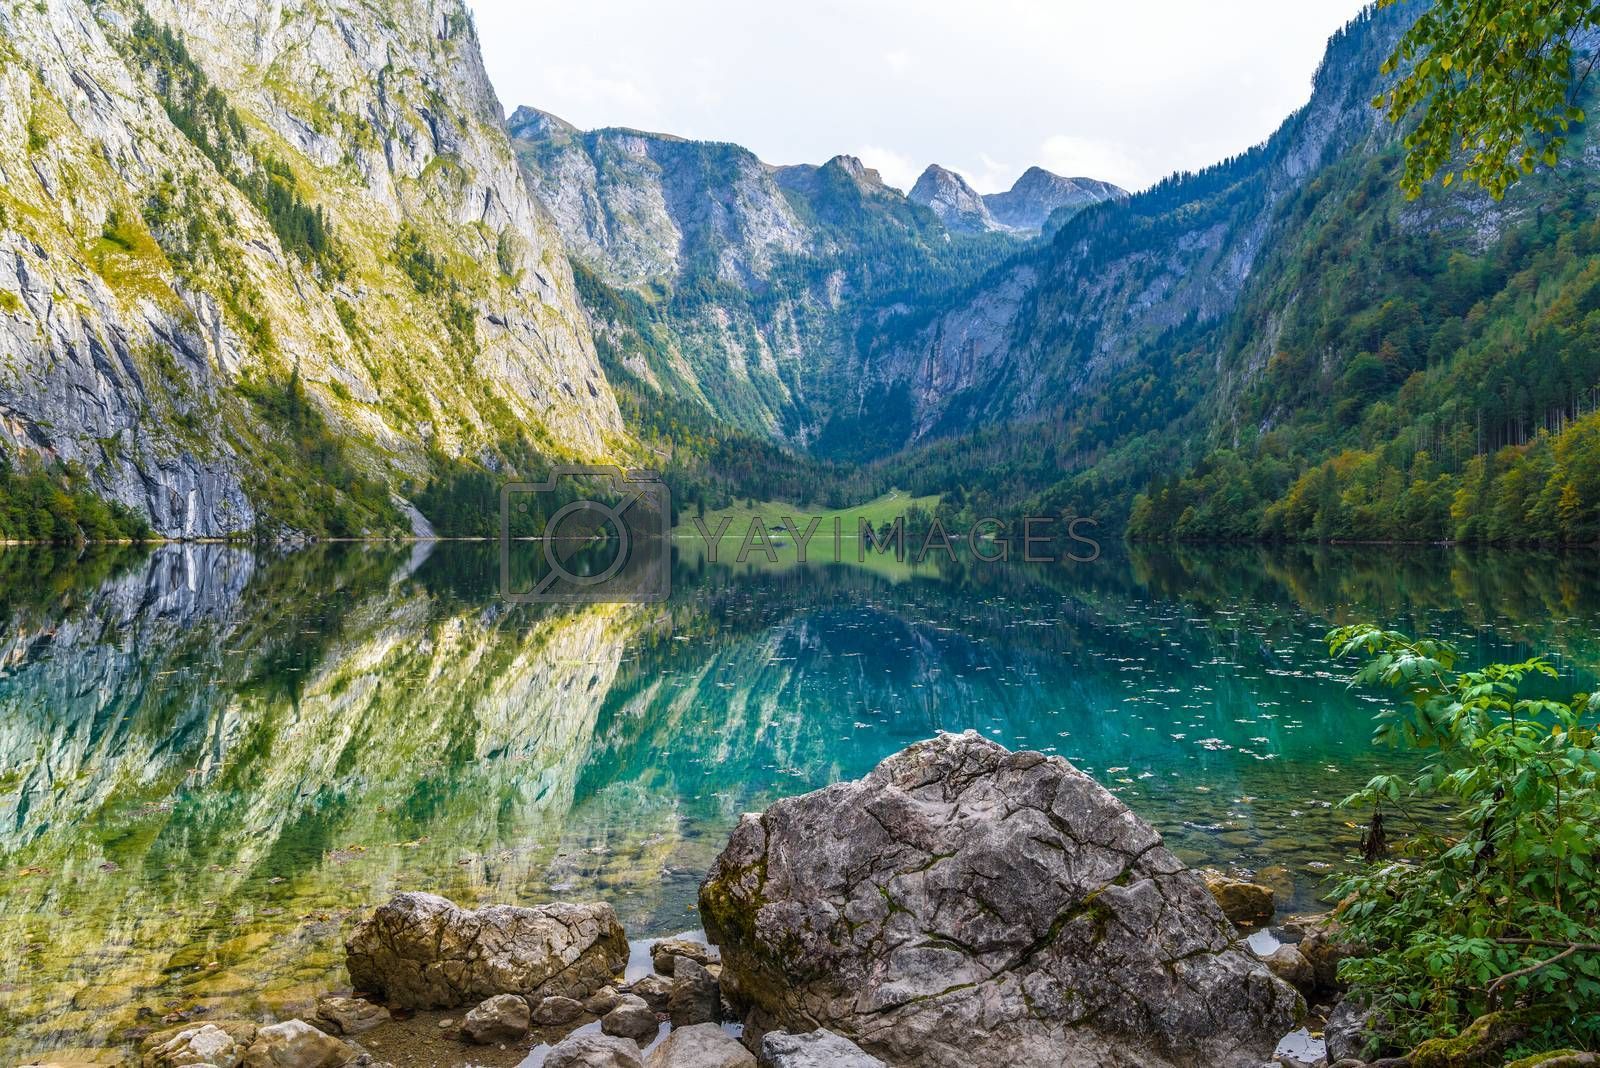 Obersee, Koenigssee, Konigsee, Berchtesgaden National Park, Bavaria, Germany Royalty Free Stock Image. , Royalty Free Image, Vectors, Footage